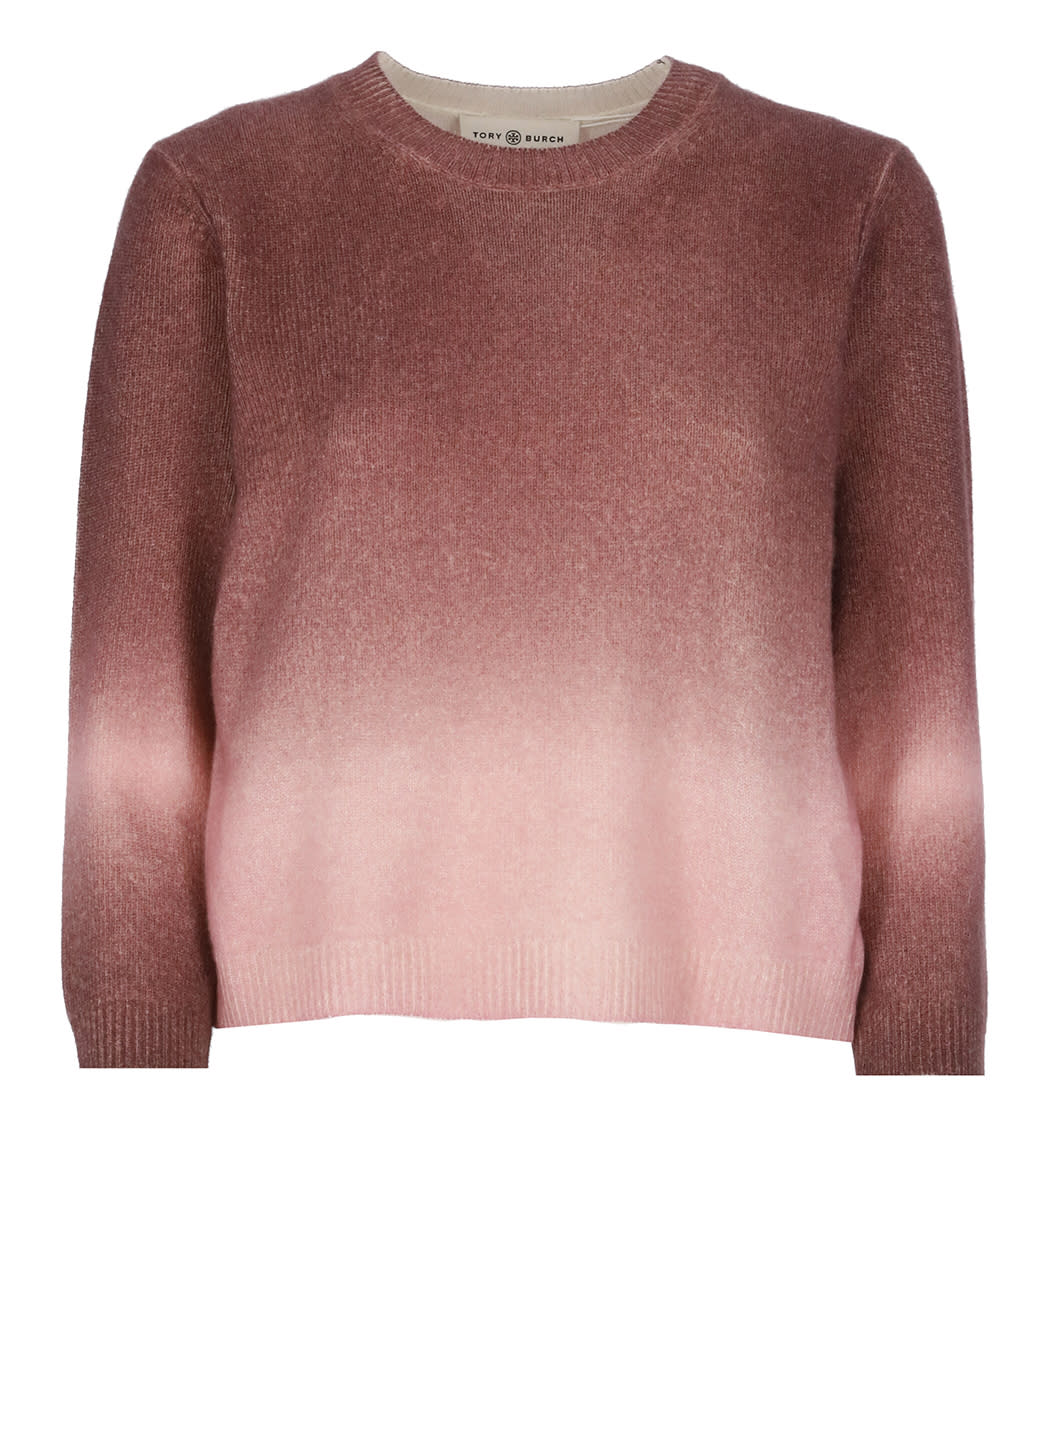 Tory Burch Cashmere Dip Dye Sweater